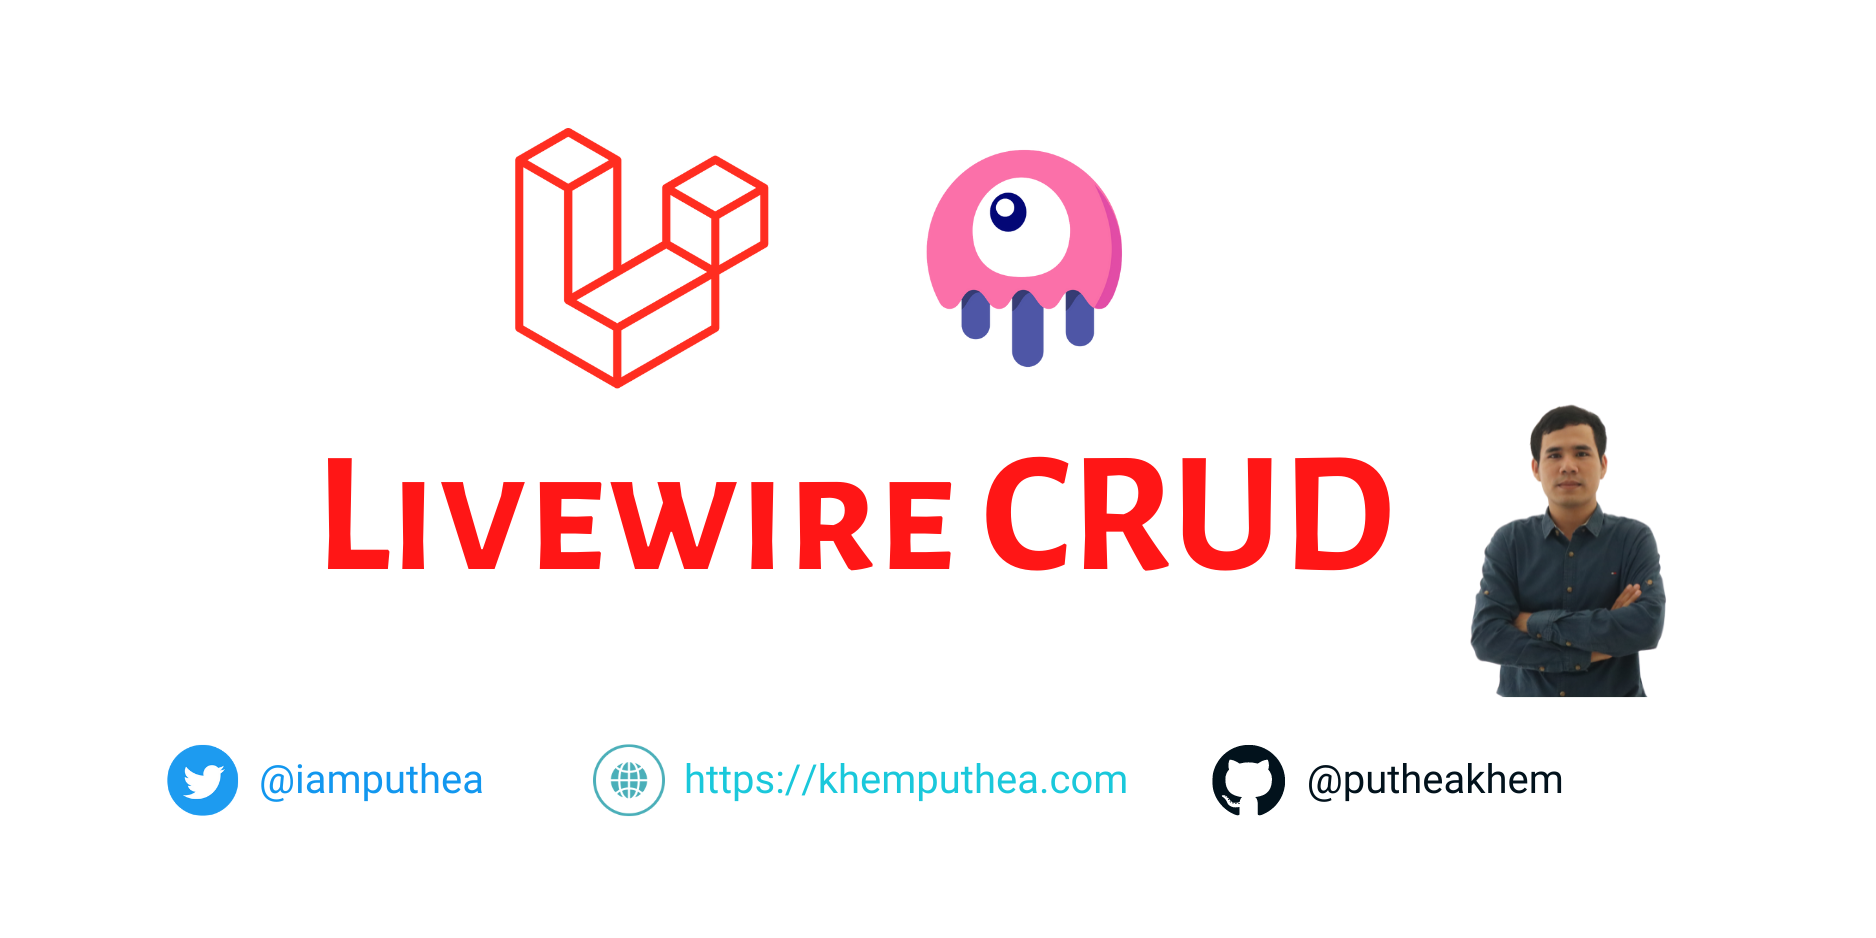 Livewire CRUD application for beginner